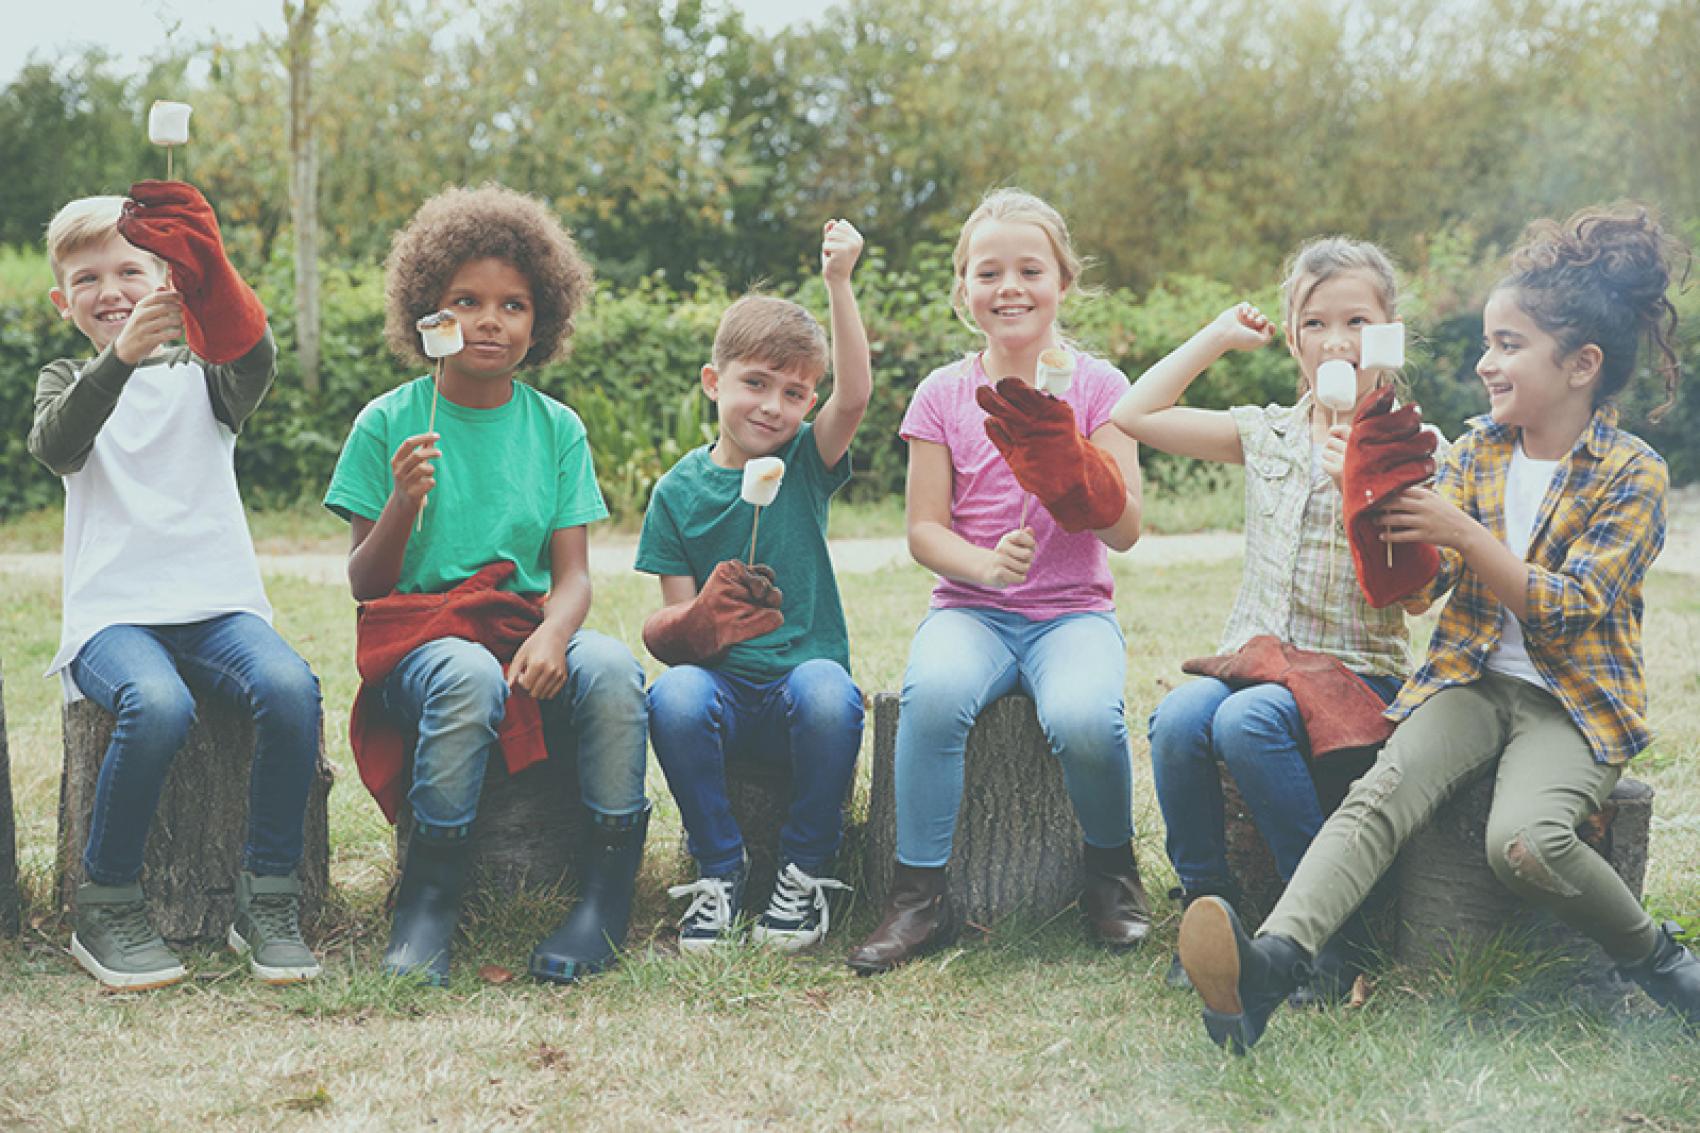 stock photo of kids holding roasted marshmallows